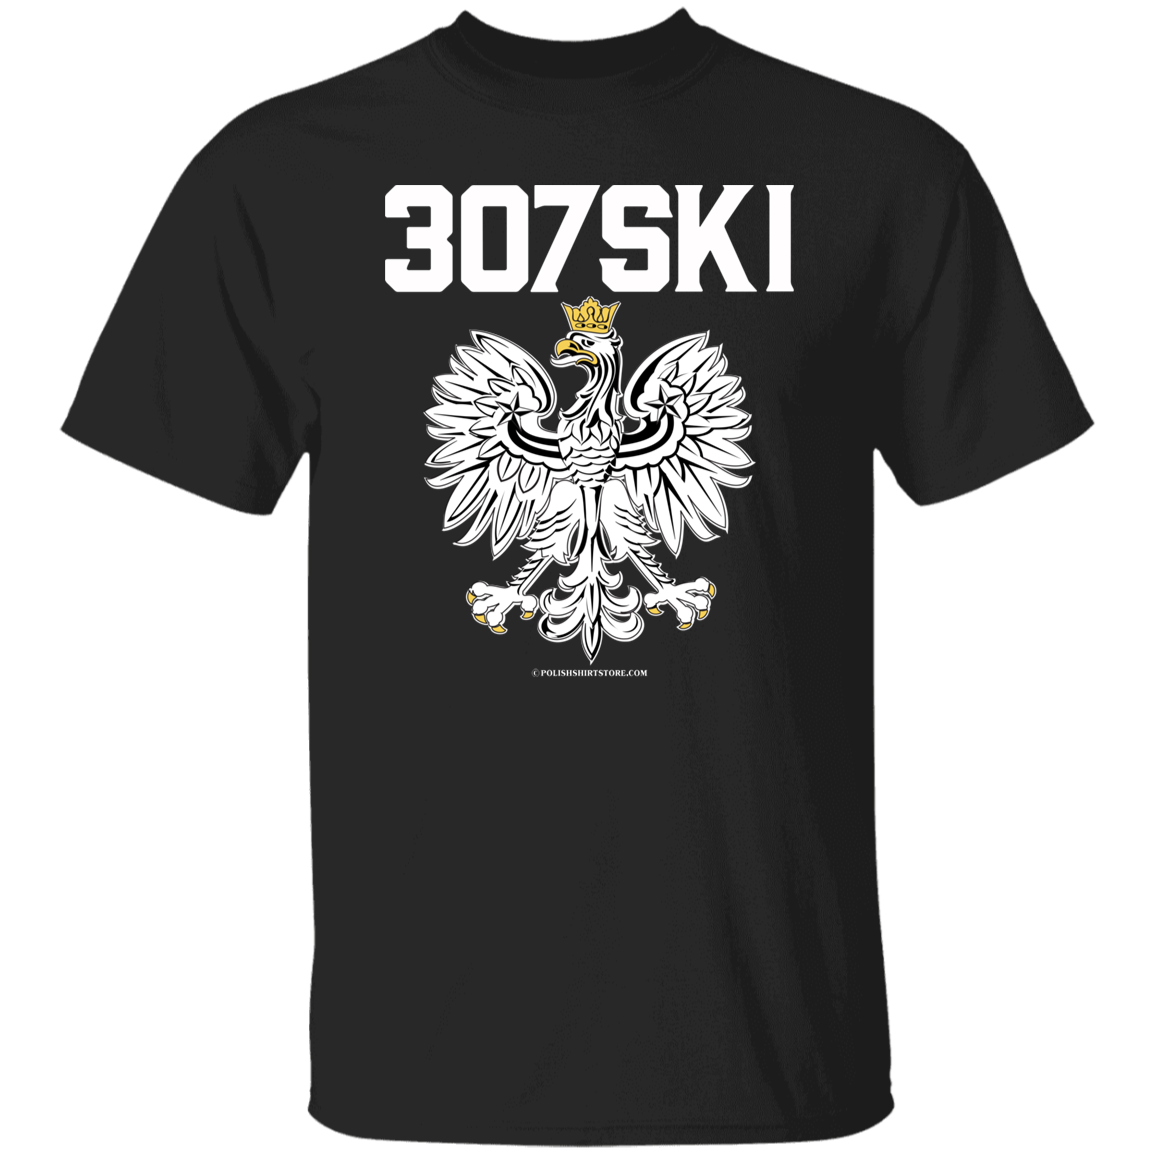 307SKI Apparel CustomCat G500 5.3 oz. T-Shirt Black S